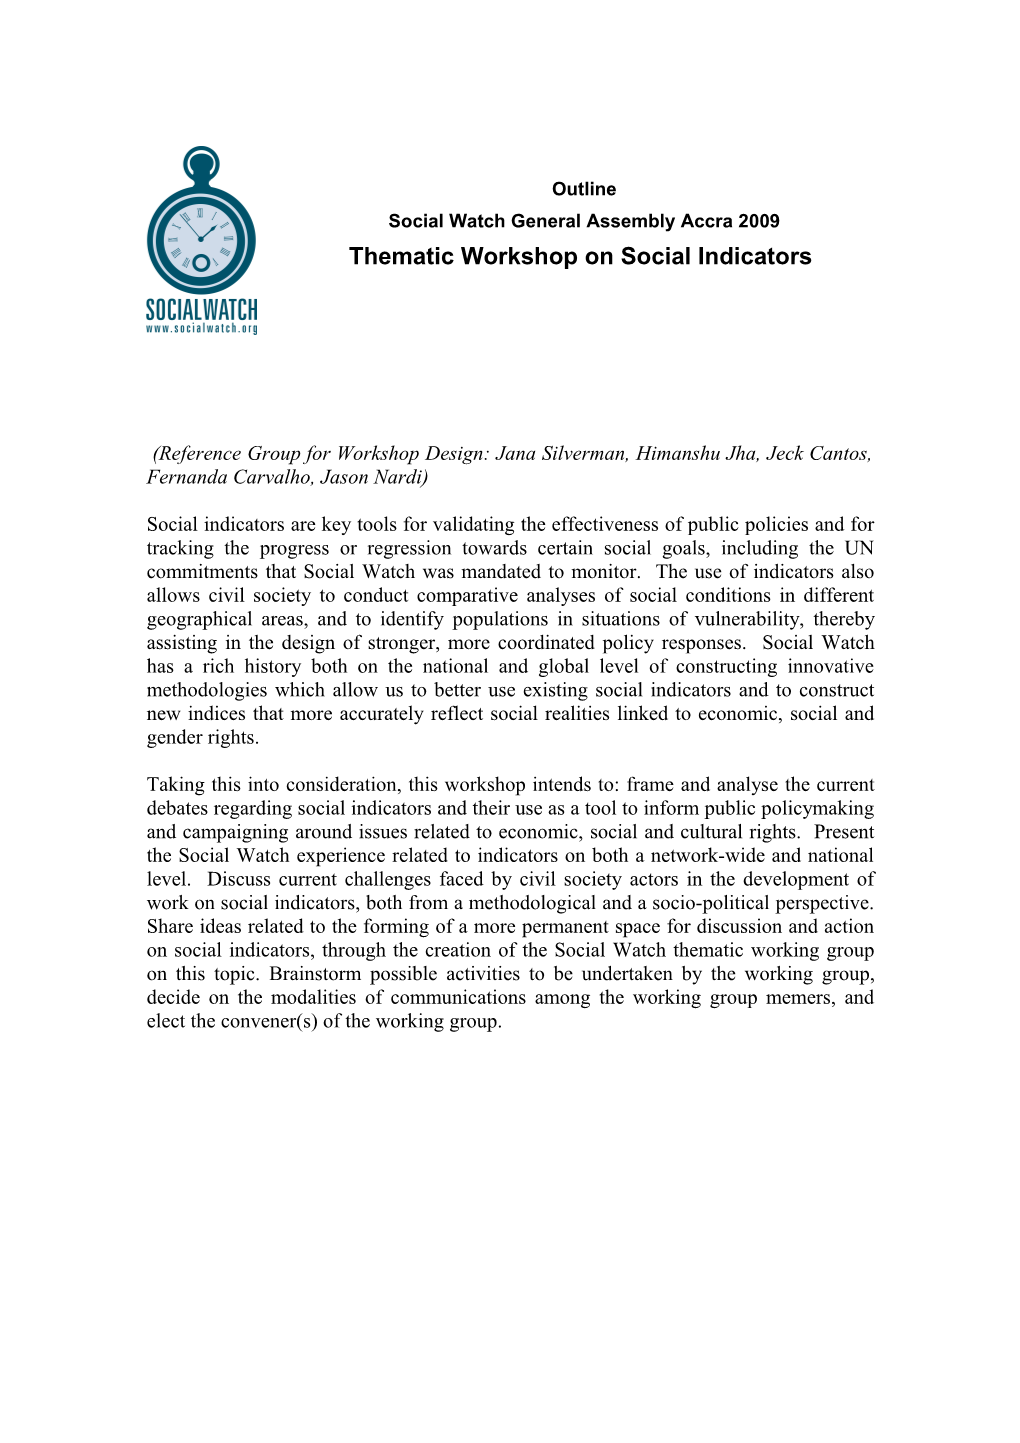 Workshop on Social Indicators